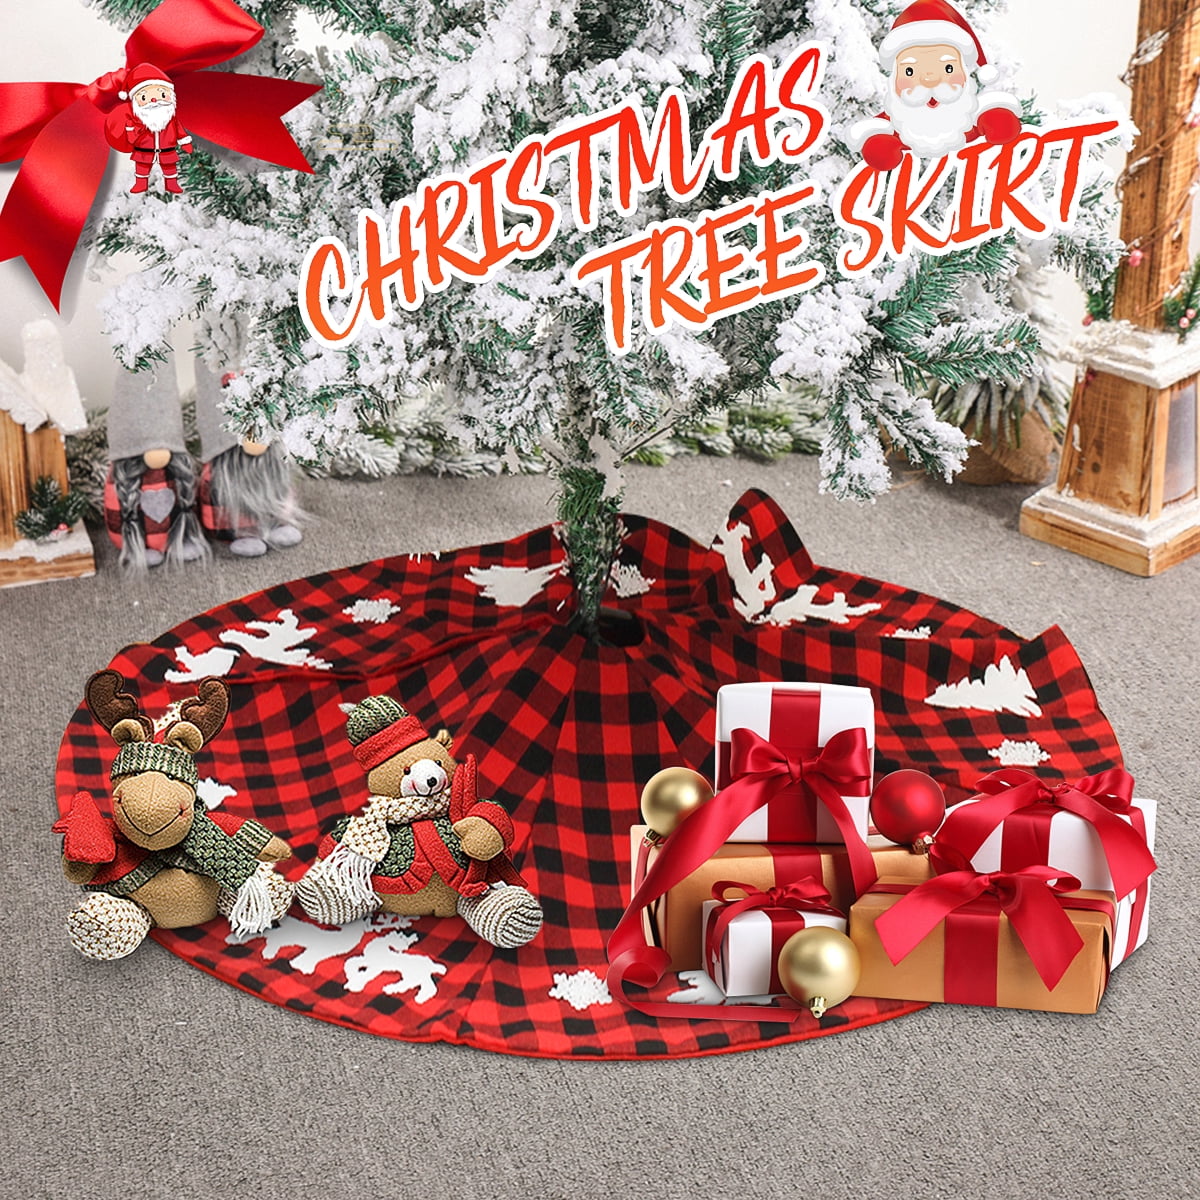 FLYFLY Christmas Tree Skirt Mat Christmas Holiday Decorations 40 Inches Xmas Holiday Tree Skirt Ornaments Christmas Party Home Decorative Tree Skirt Elk Style 